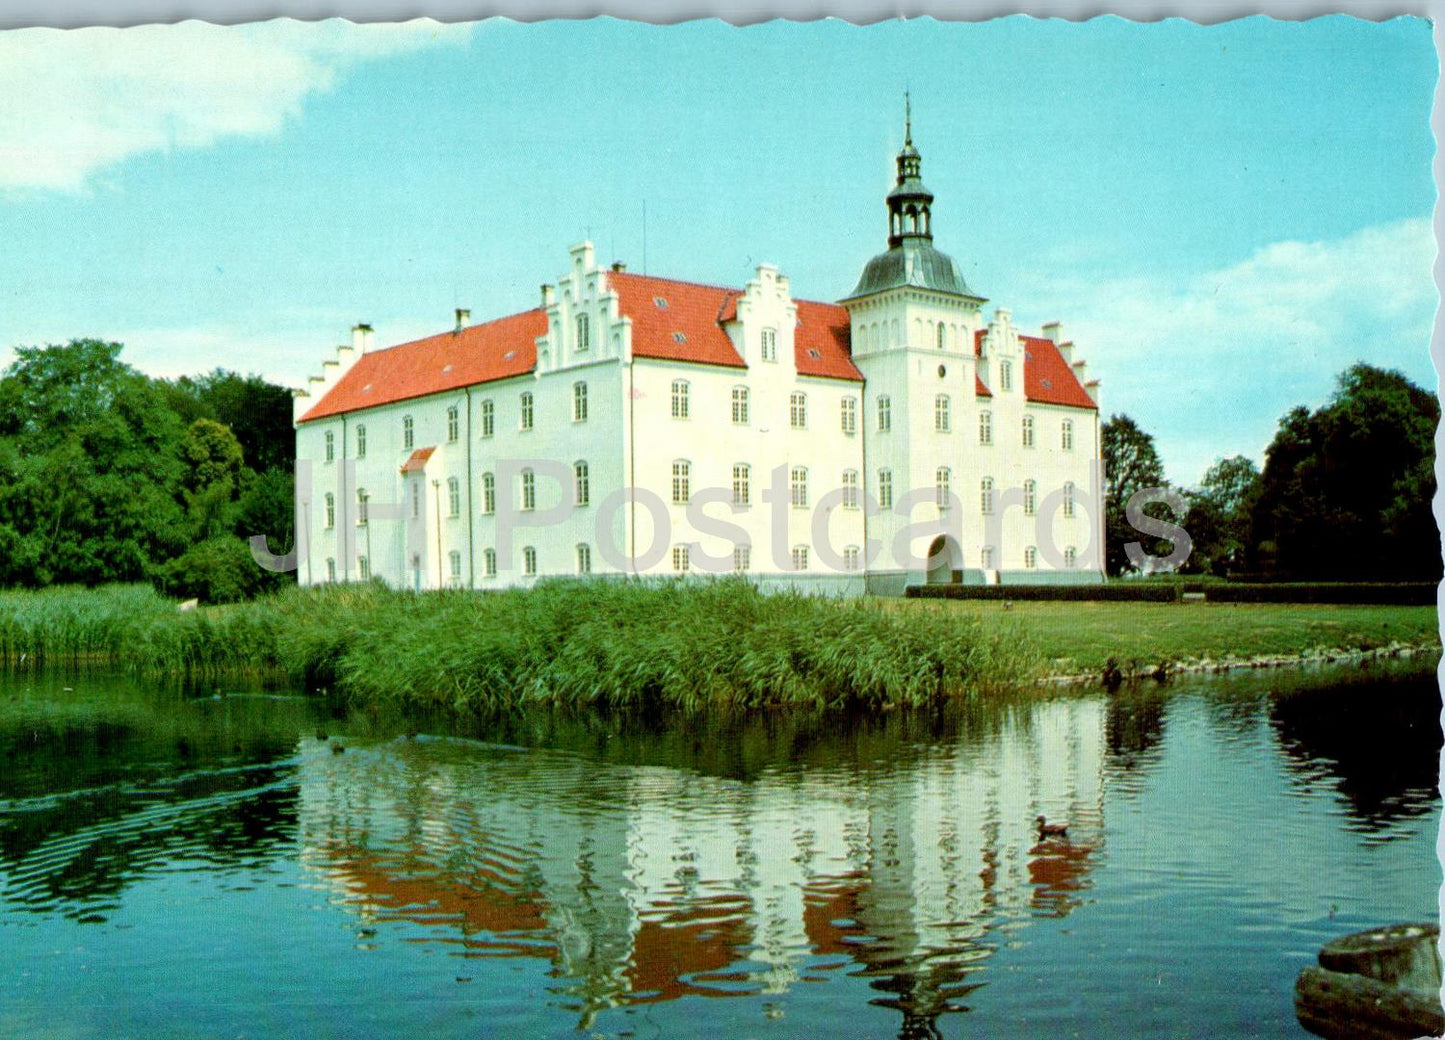 Meilgaard Slotskro - Tranehuse - castle inn - multiview - 1017 - Denmark - unused